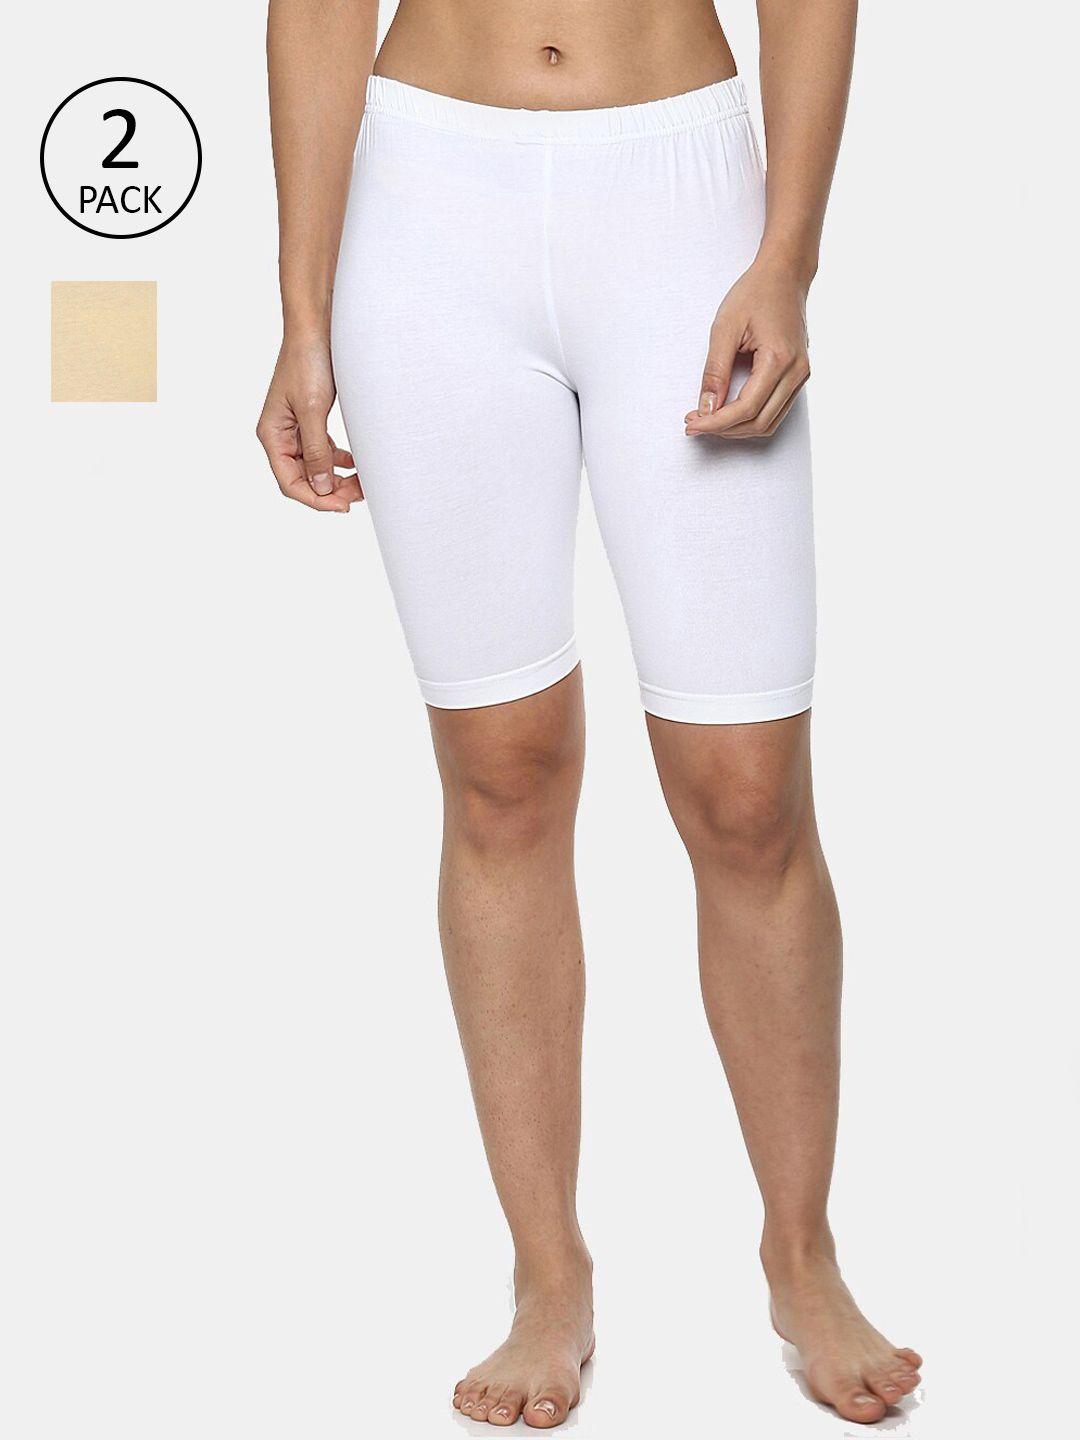 amosio-set-2-women-white-&-beige-high-rise-lounge-shorts